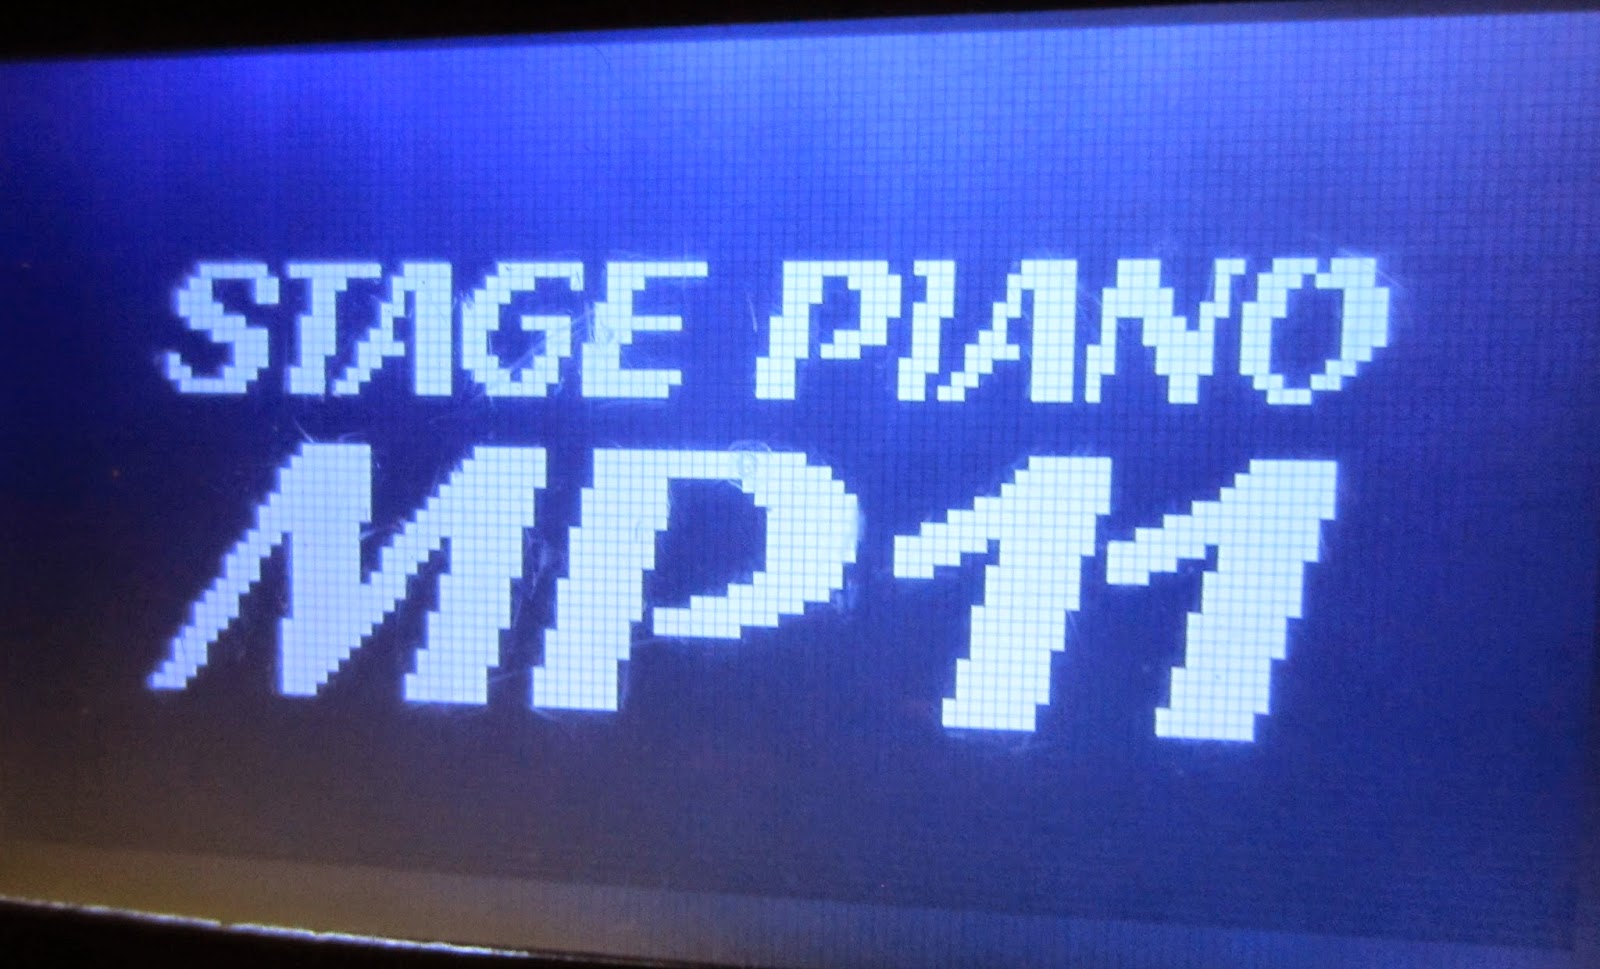 Kawai MP11 digital piano